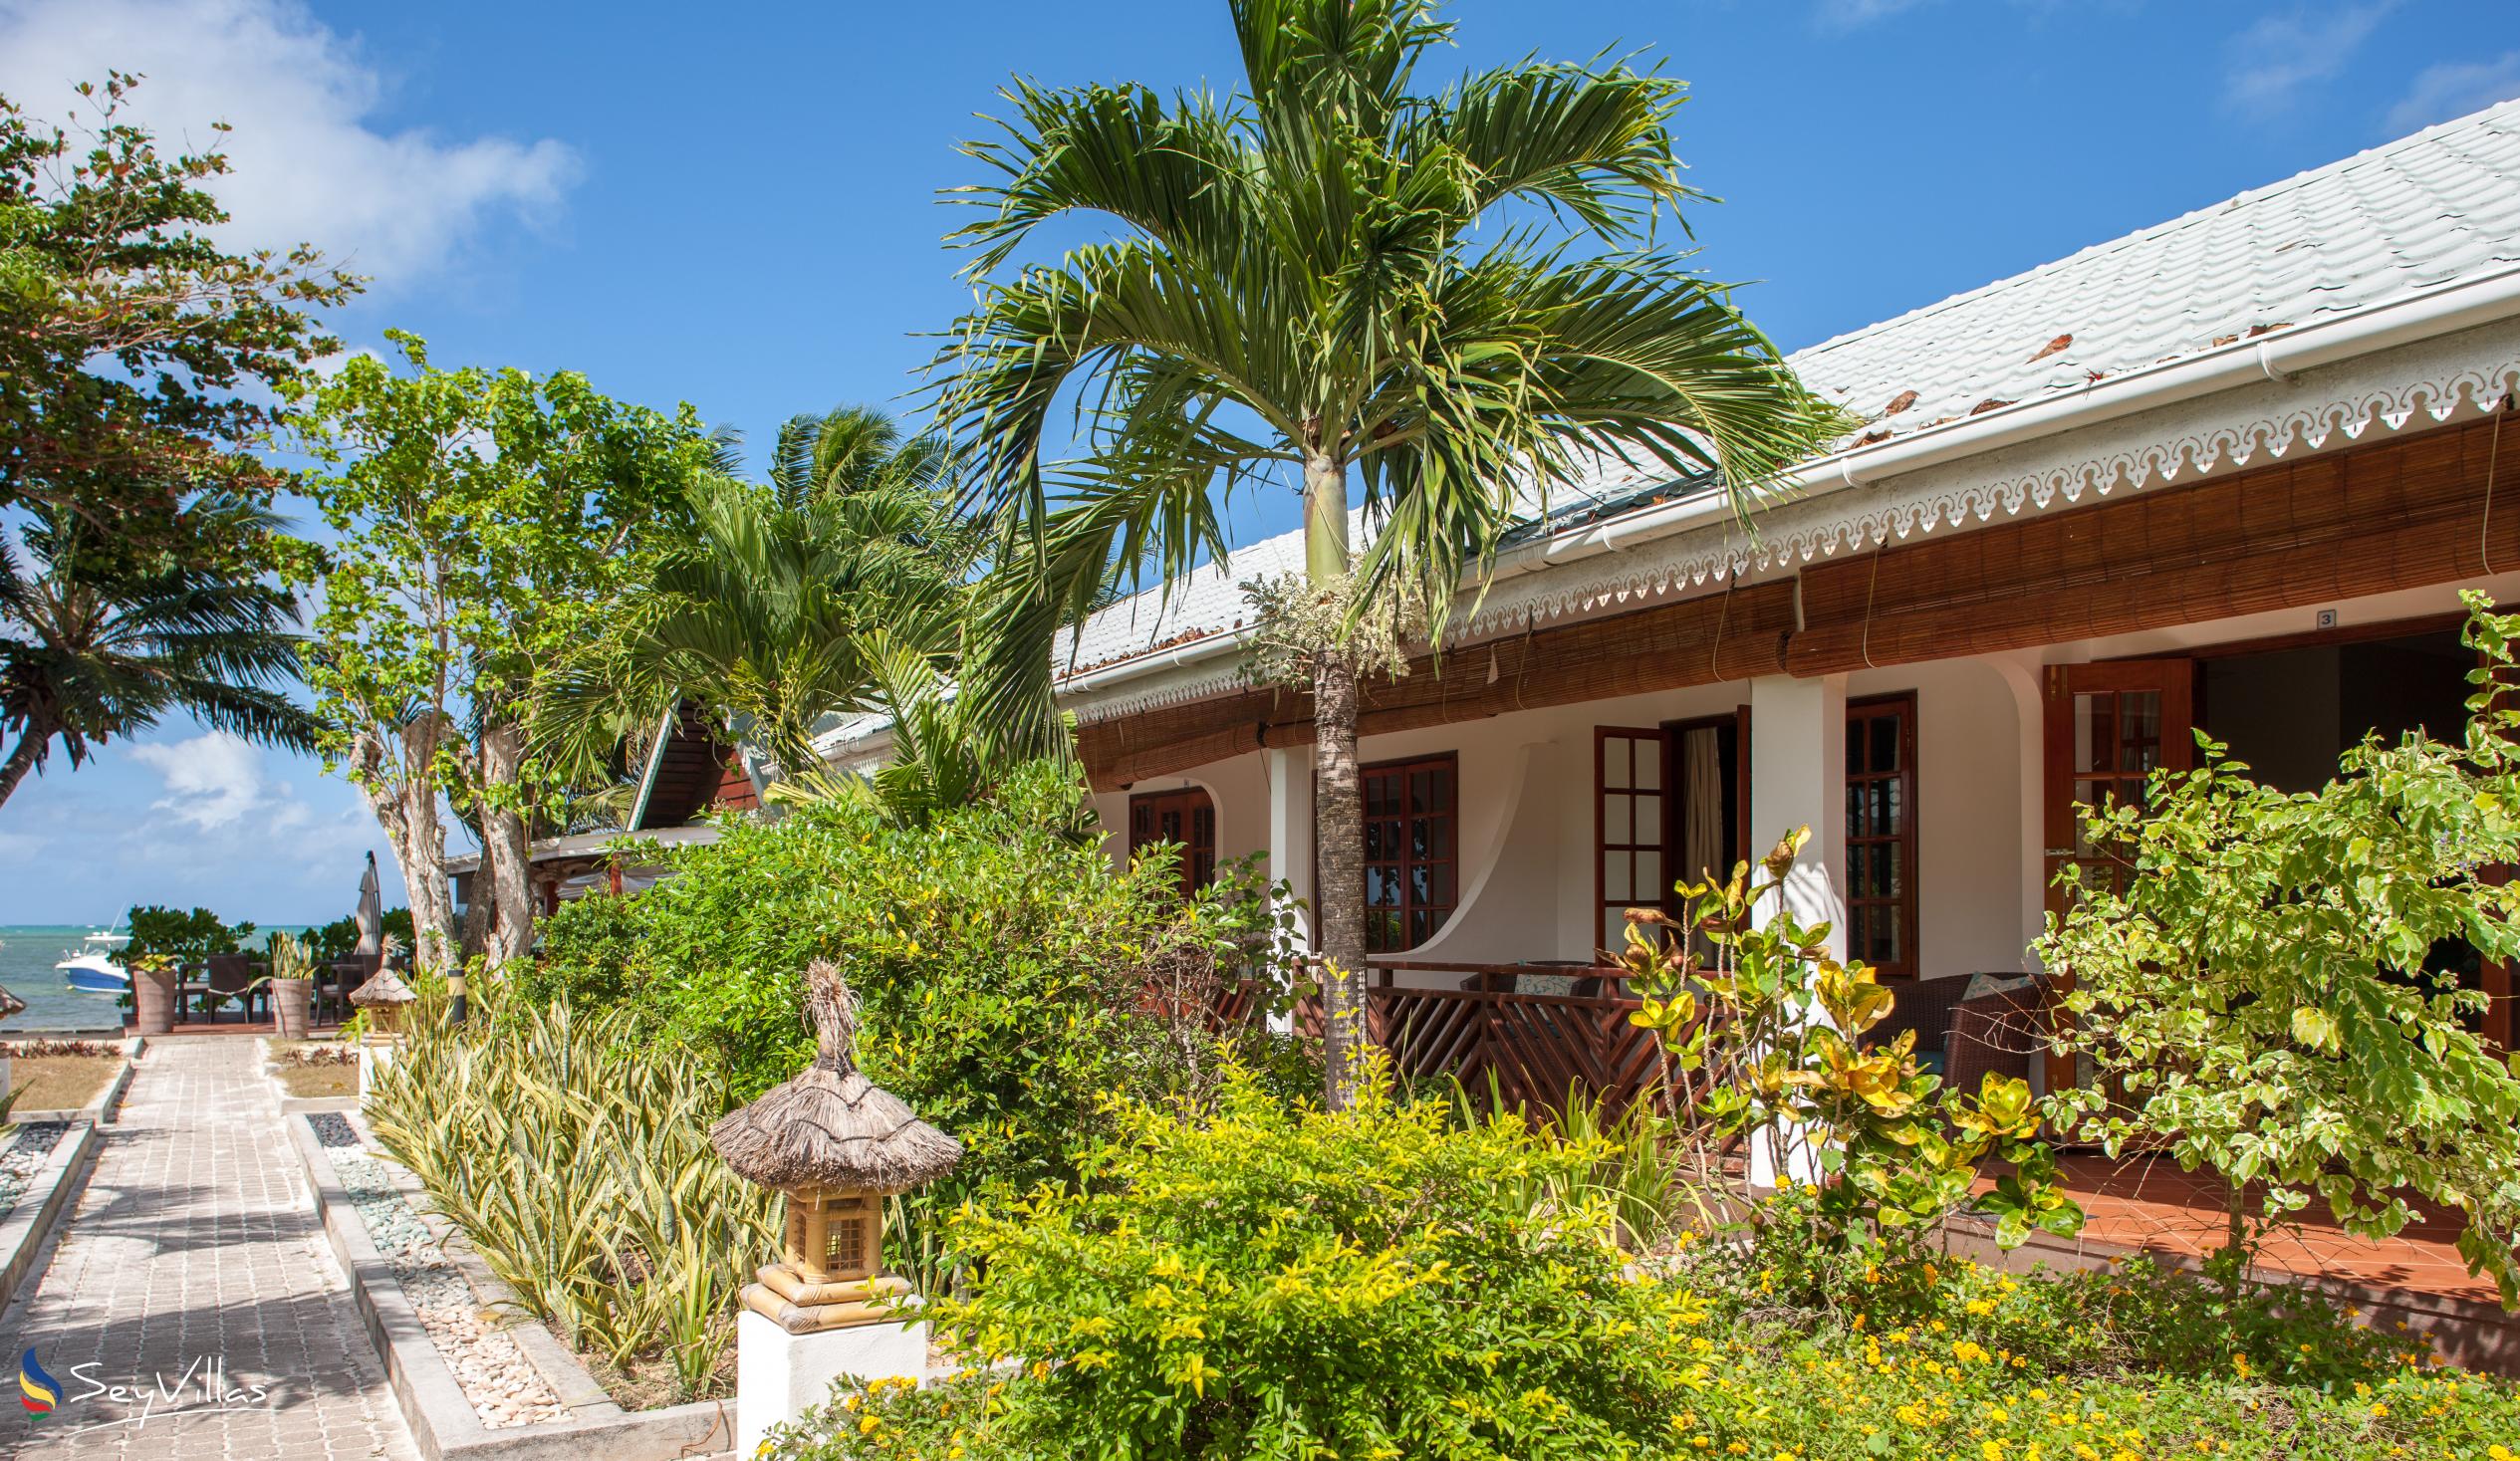 Foto 18: Villas de Mer - Aussenbereich - Praslin (Seychellen)